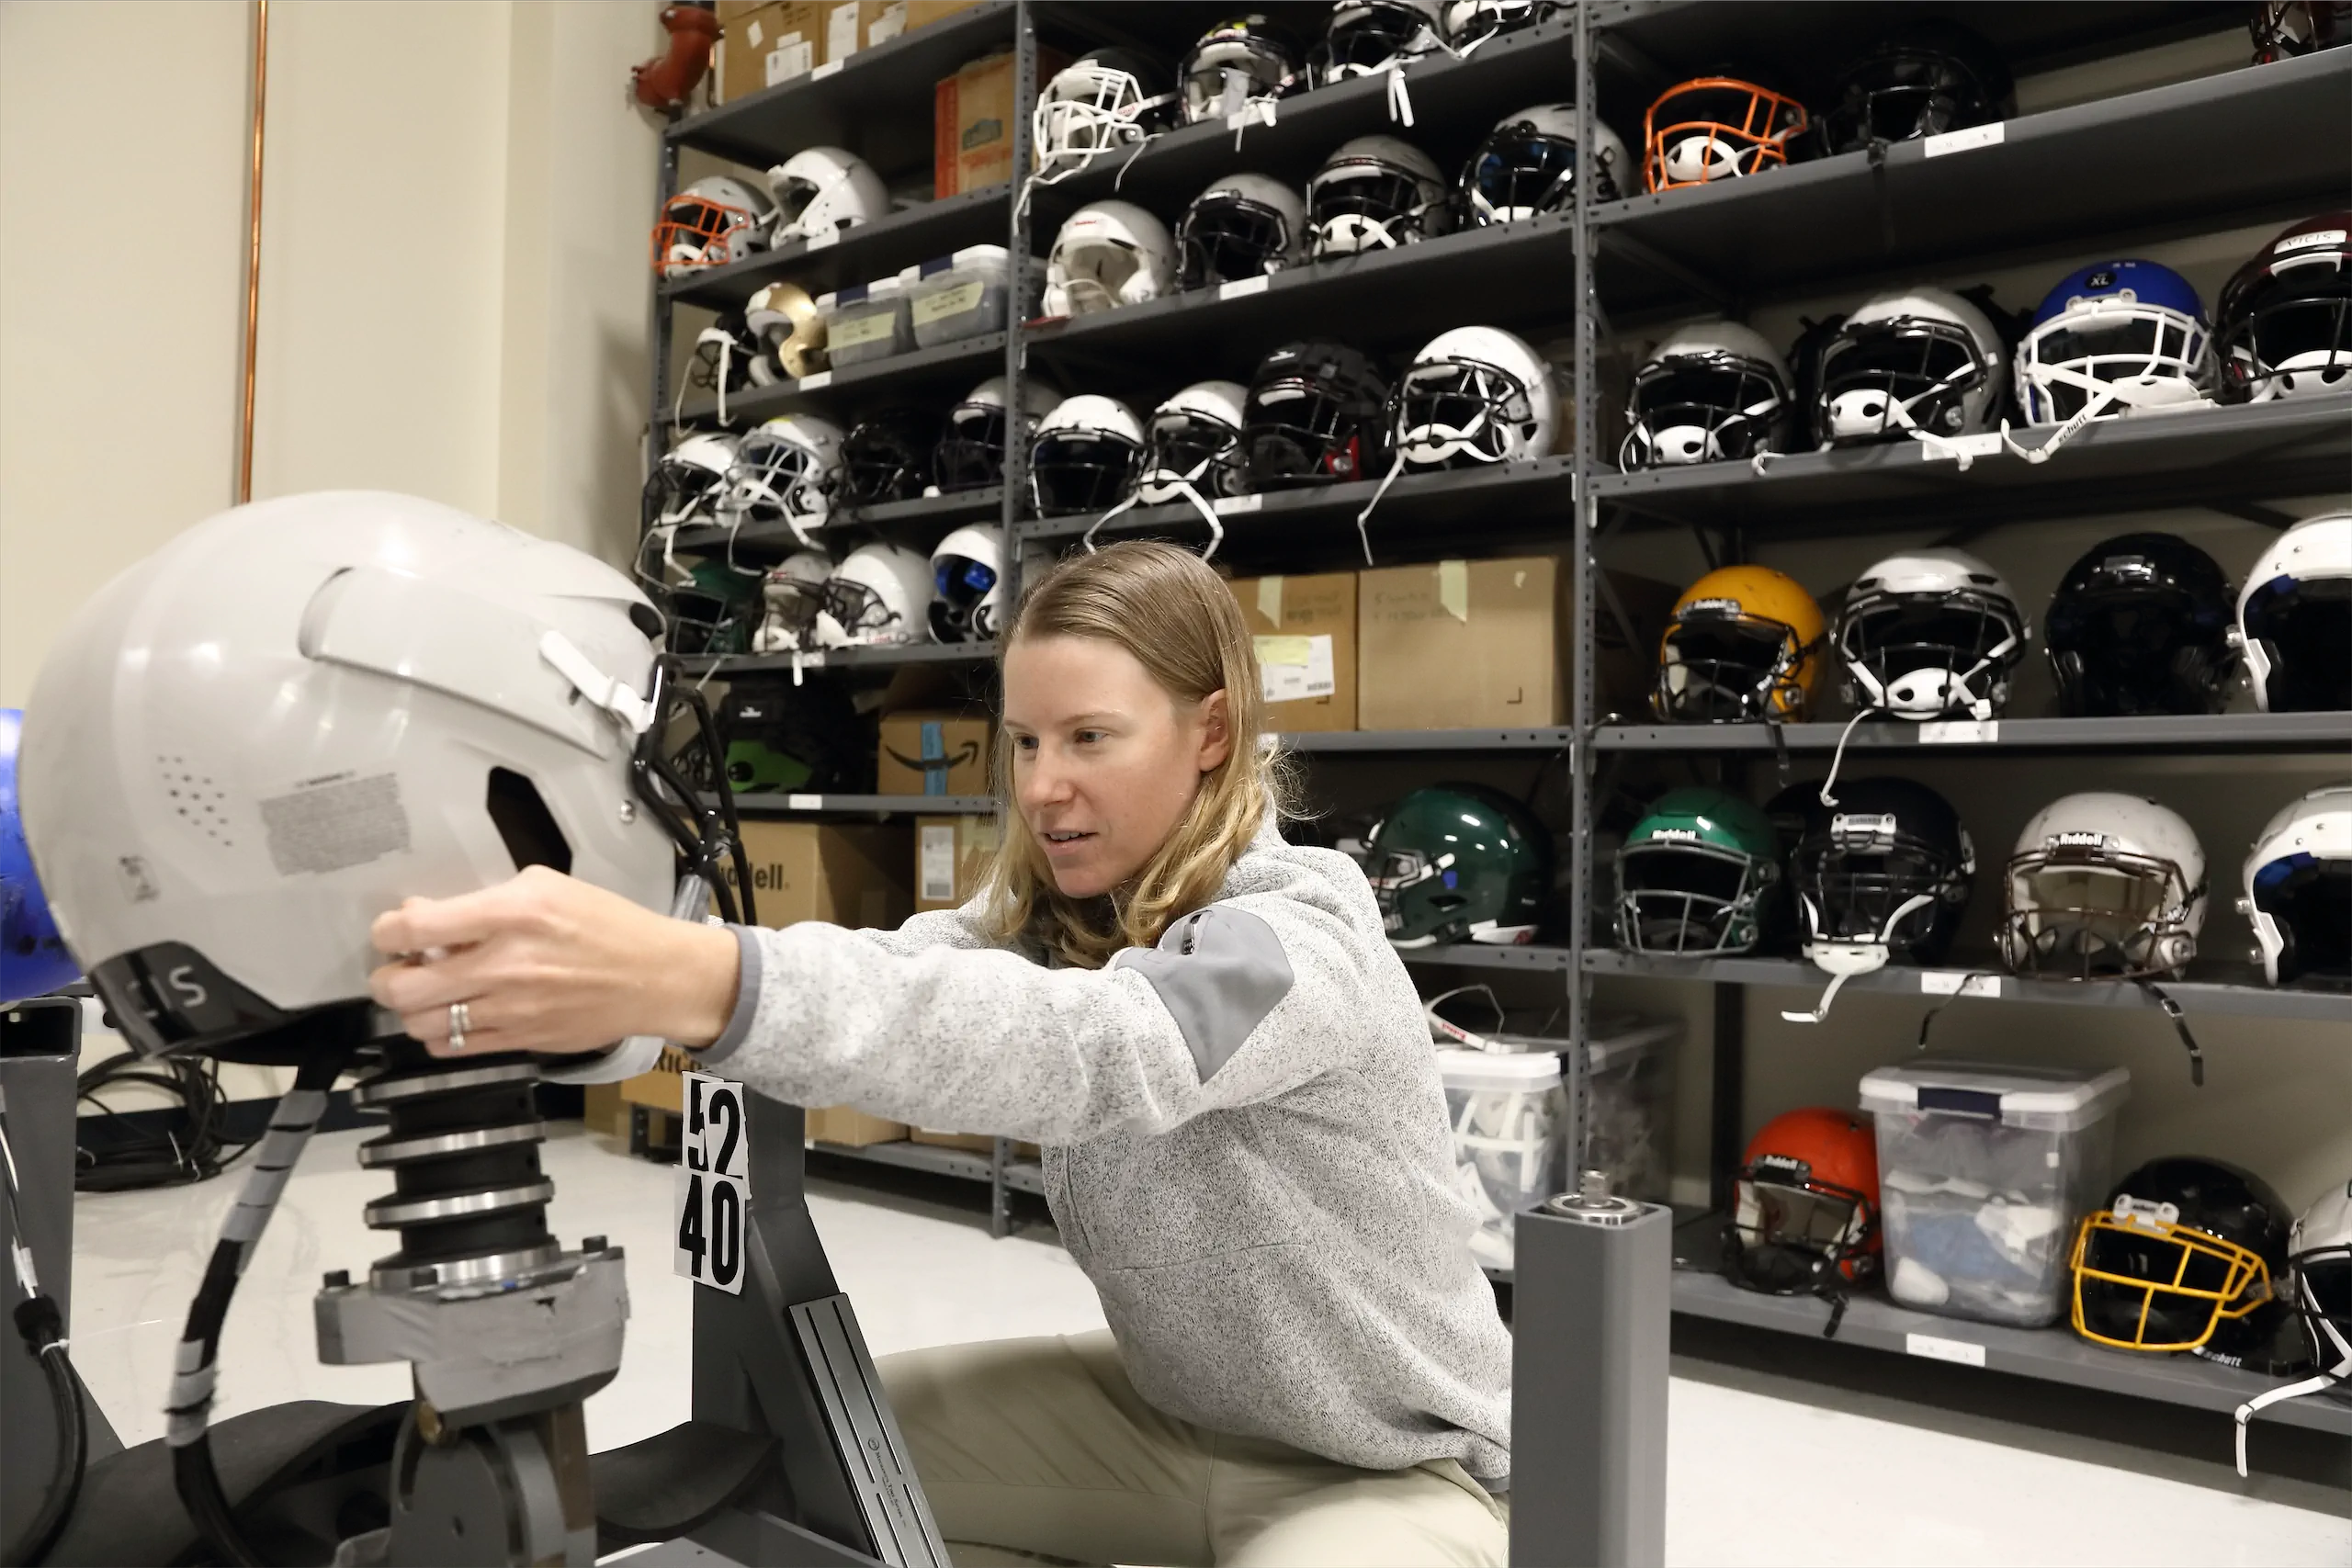 Engineer testing football helmet with impact tester